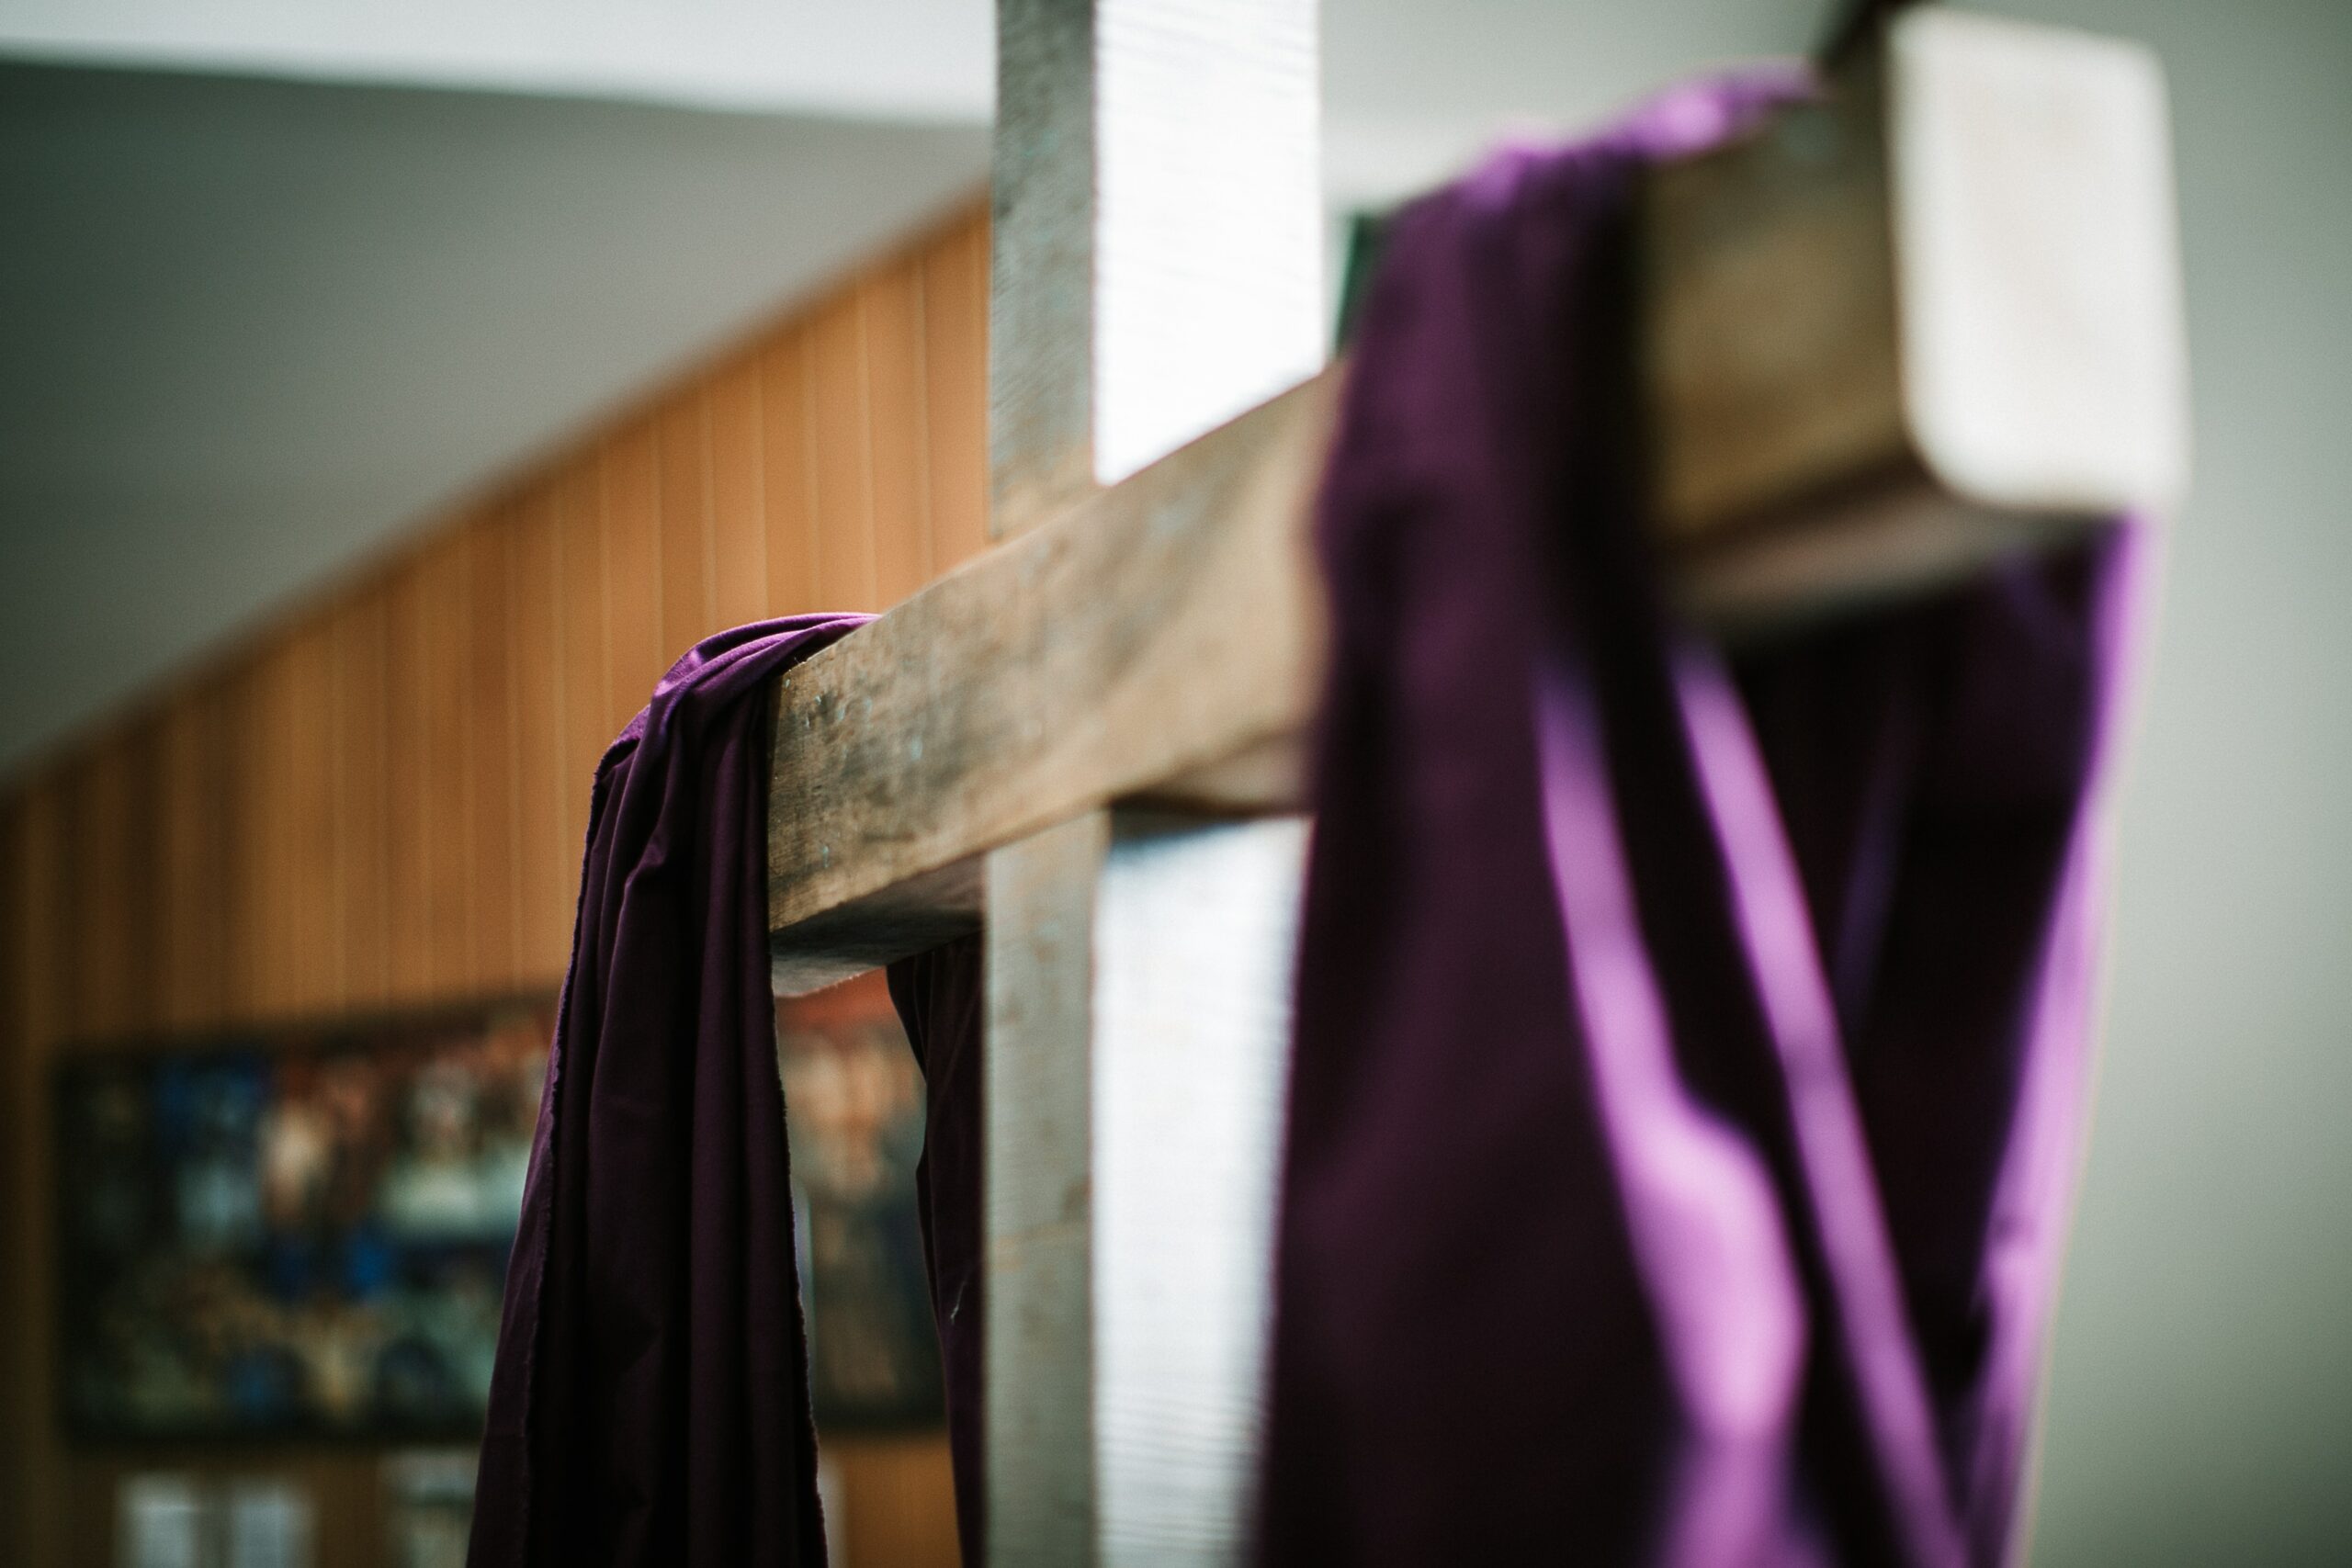 Wooden cross with a purple drape.